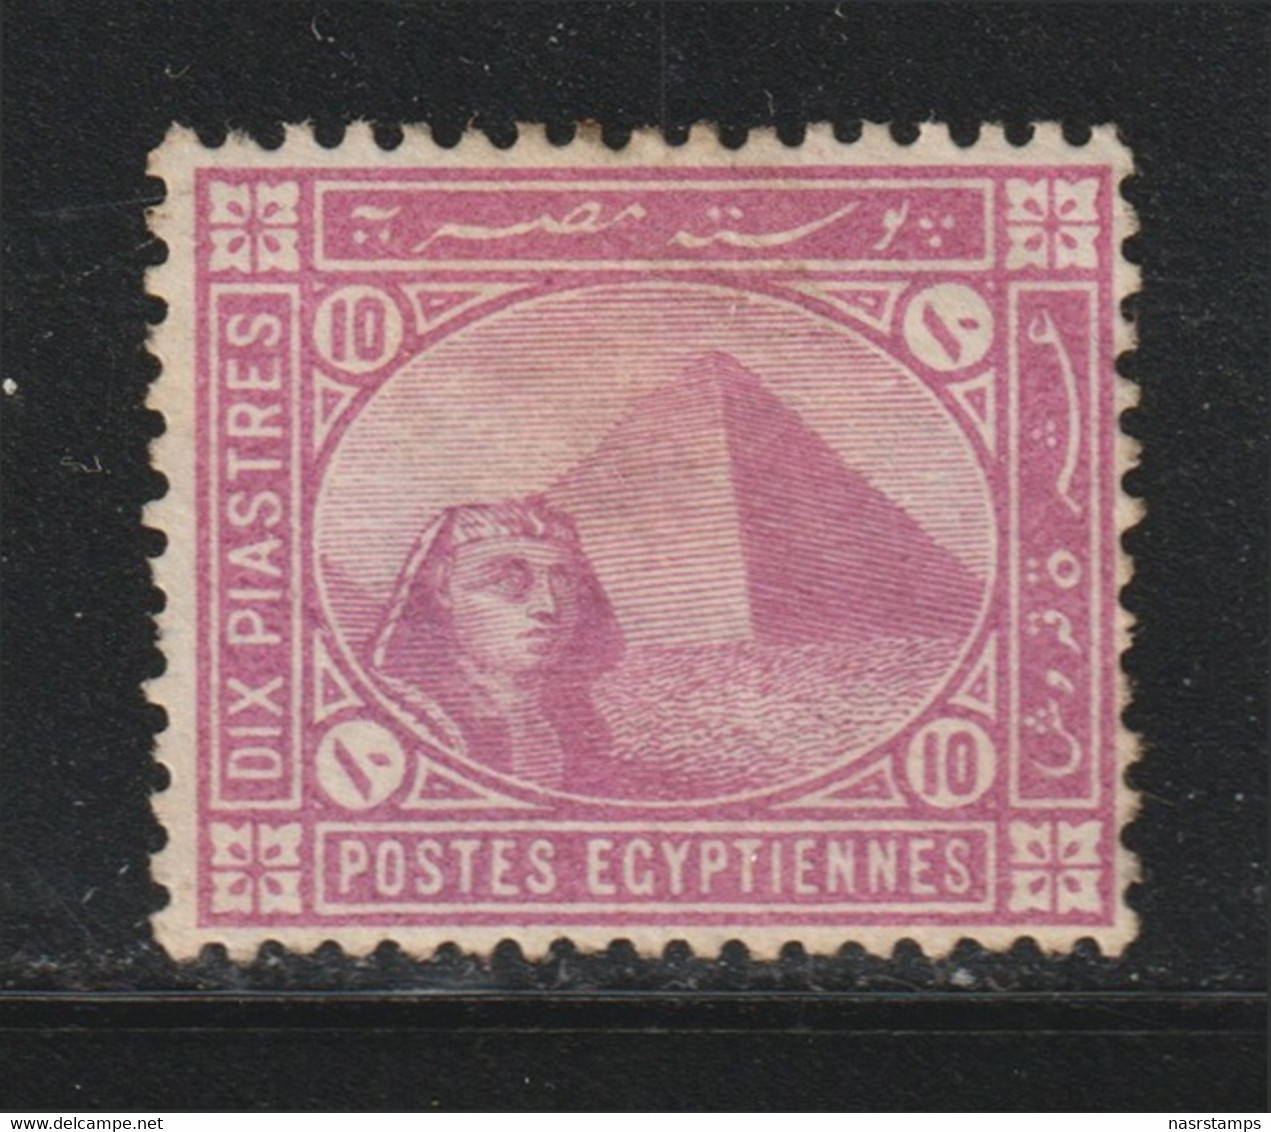 Egypt - 1902 - Rare - ( De La Rue - 10p ) - MH - High C.V. - 1866-1914 Khedivate Of Egypt